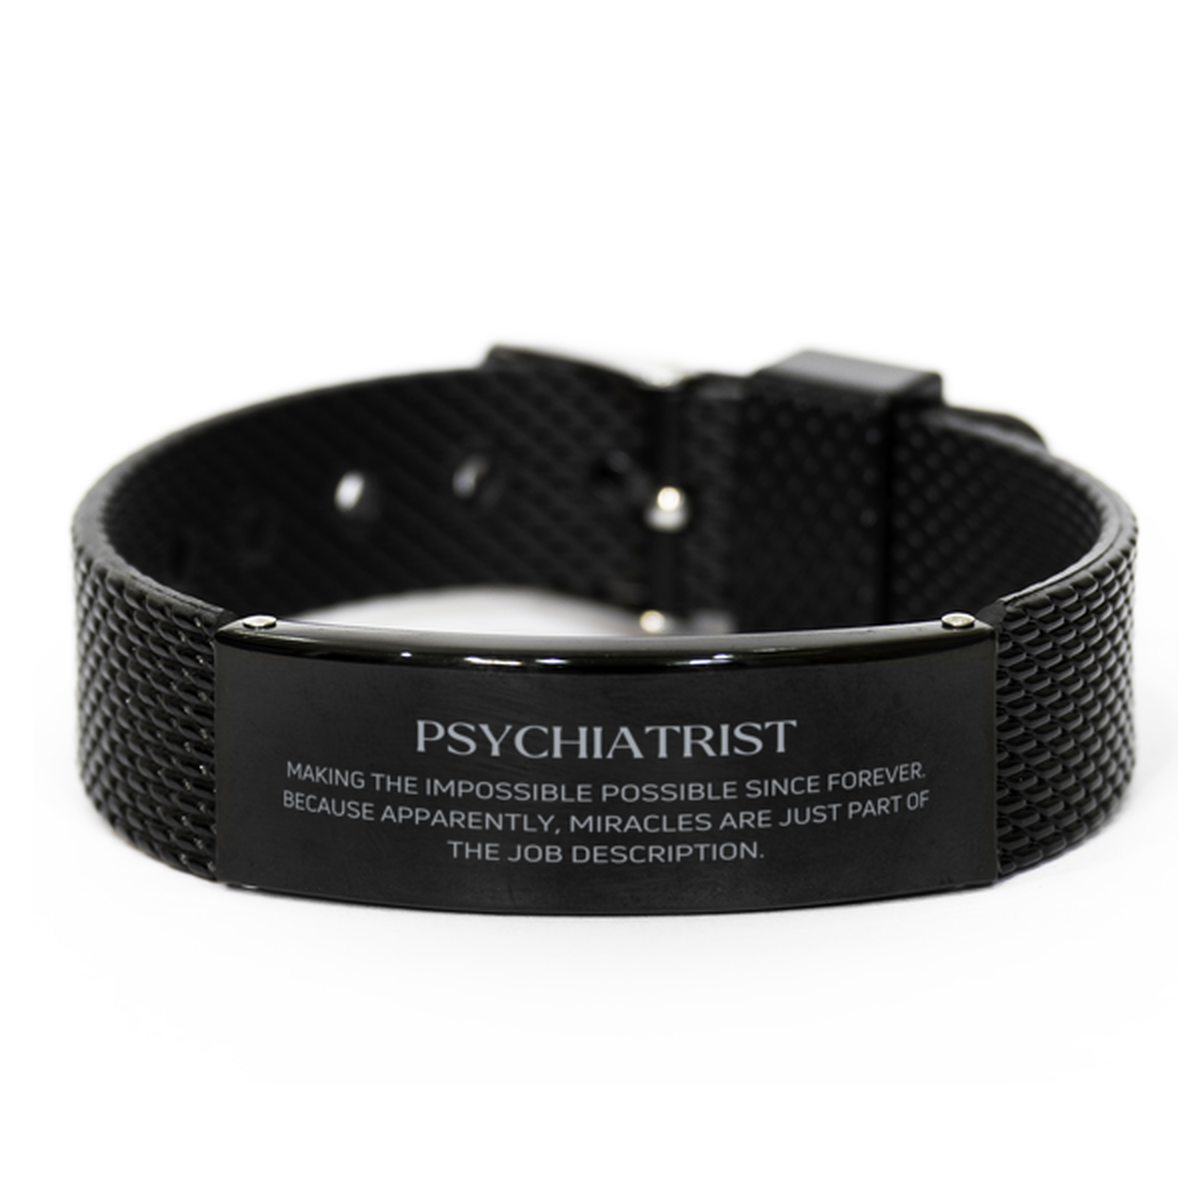 Funny Psychiatrist Gifts, Miracles are just part of the job description, Inspirational Birthday Black Shark Mesh Bracelet For Psychiatrist, Men, Women, Coworkers, Friends, Boss